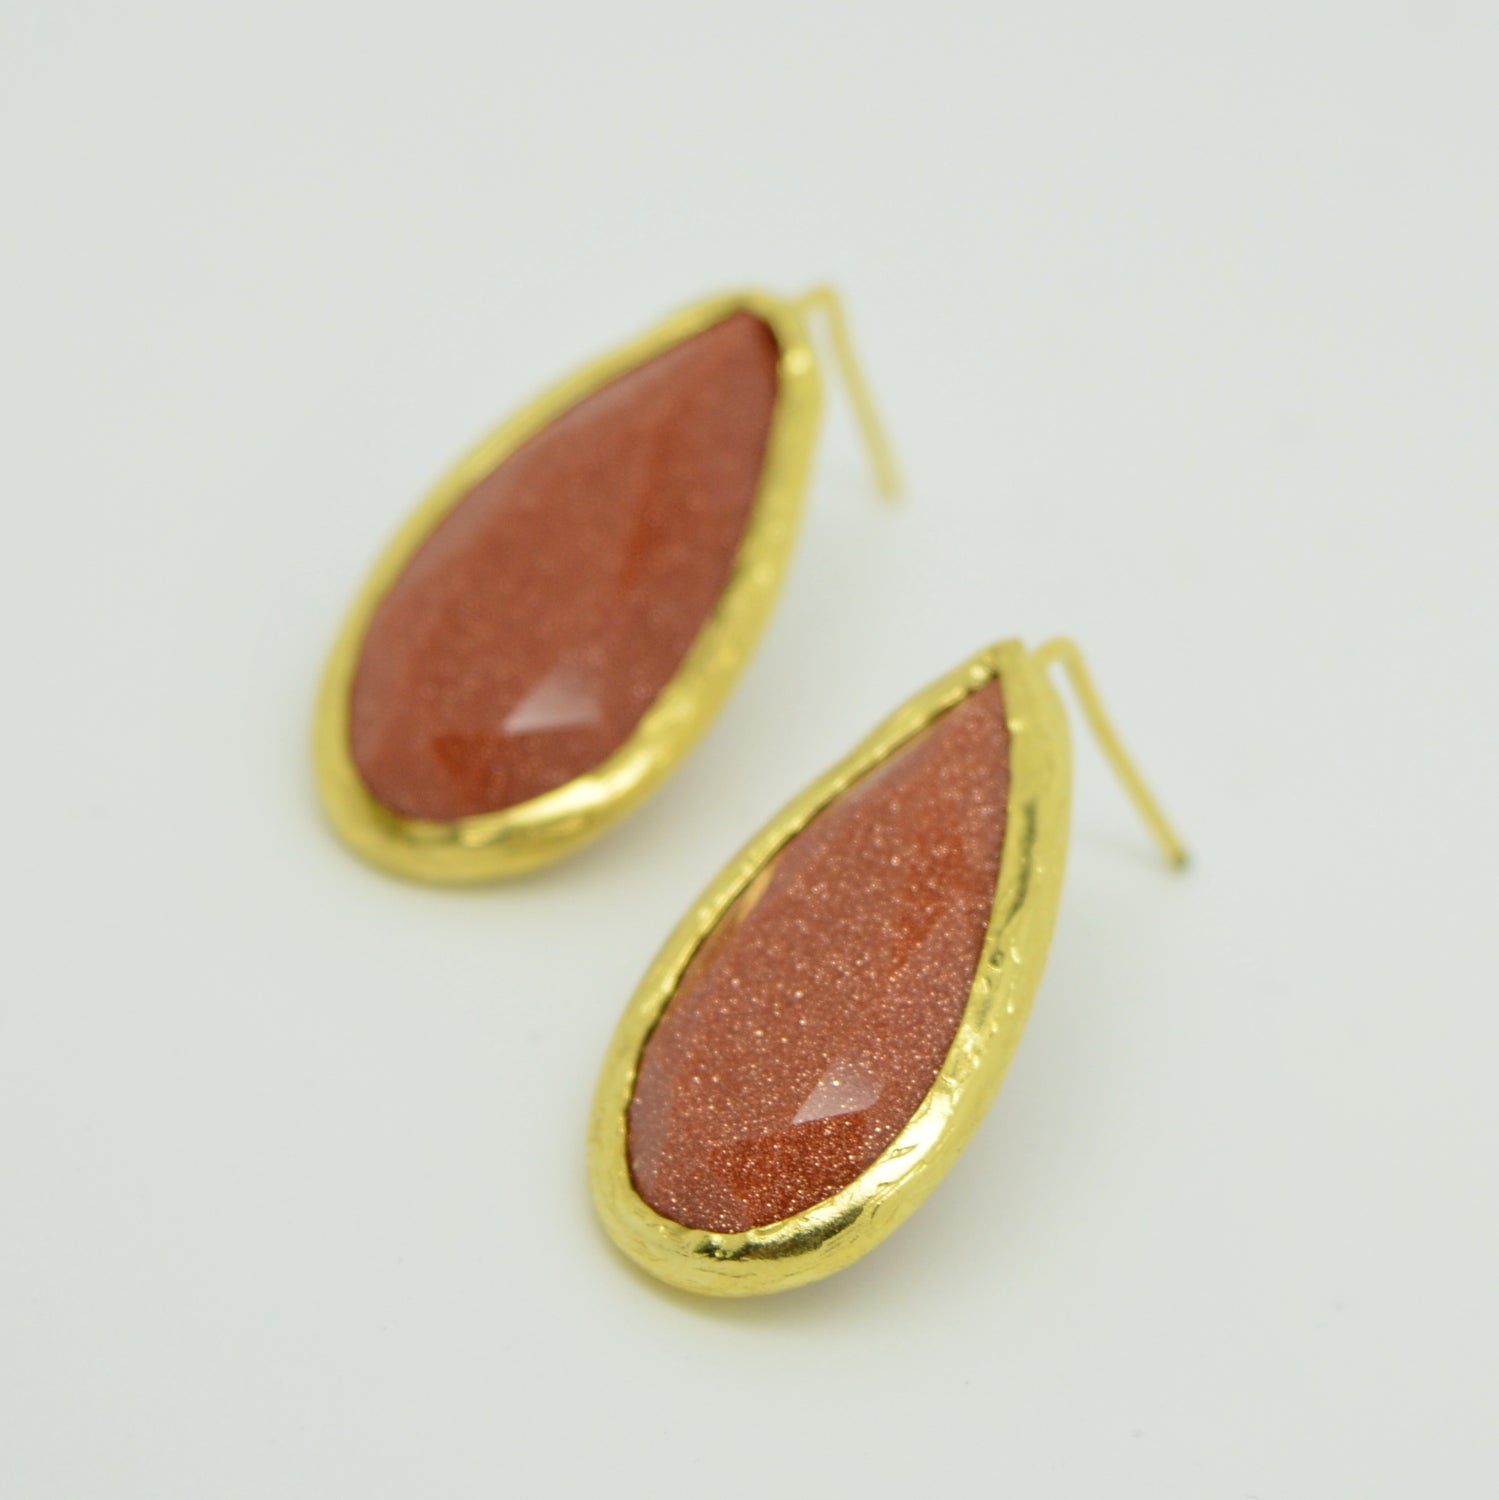 Aylas gold plated semi precious gem stone earrings teardrop Gold stone - Ottoman Handmade Jewellery Hand Made Gold Plated